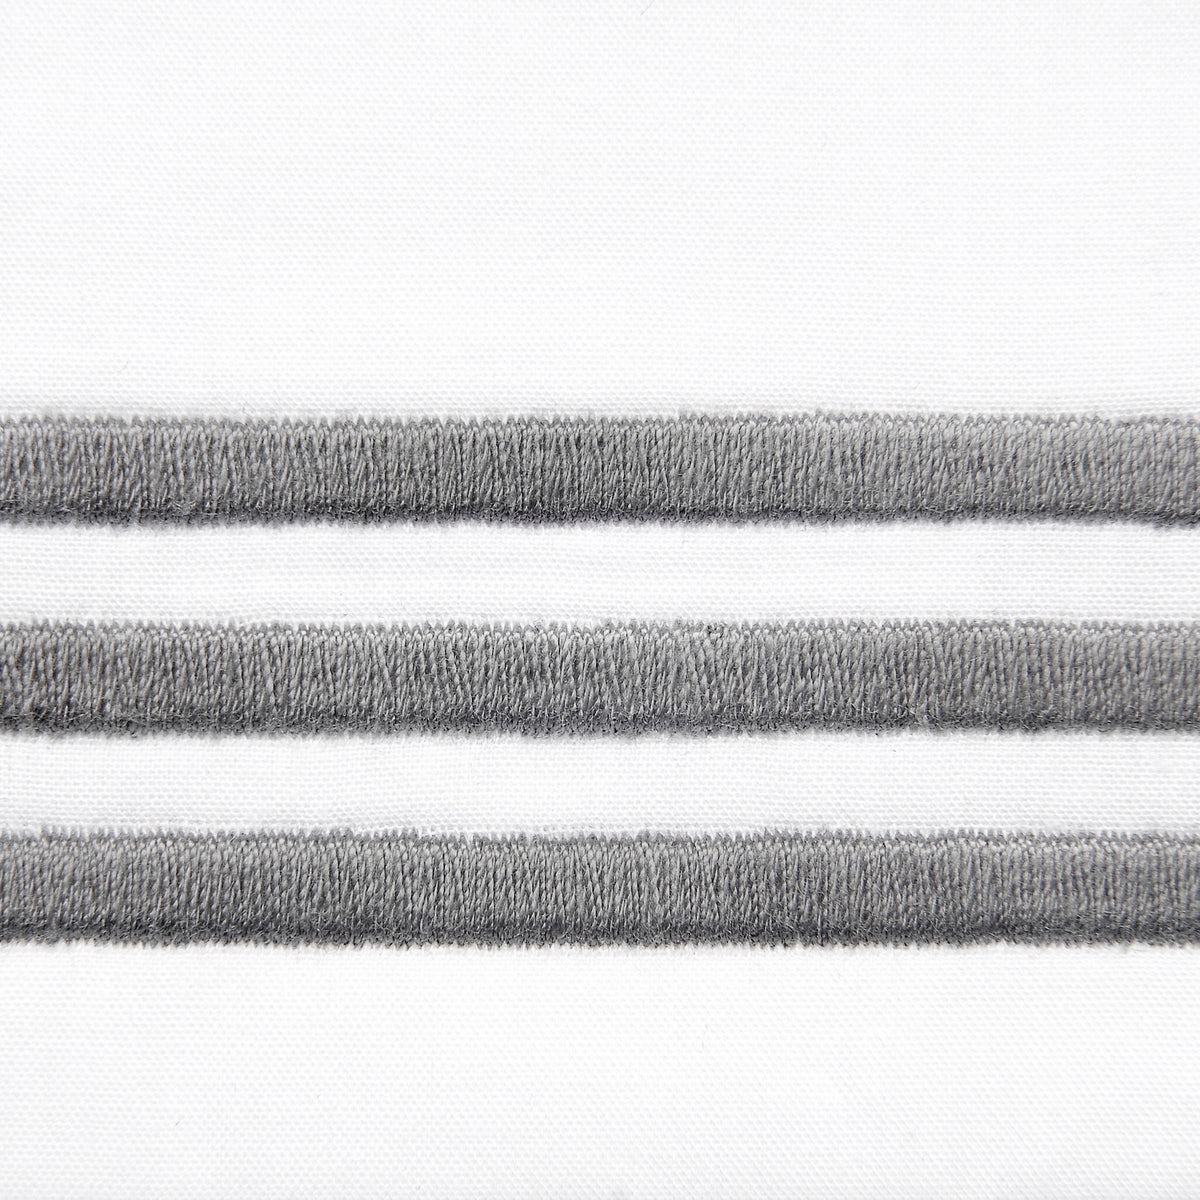 Fabric Closeup of Signoria Platinum Percale Bedding in White/Lead Grey Color